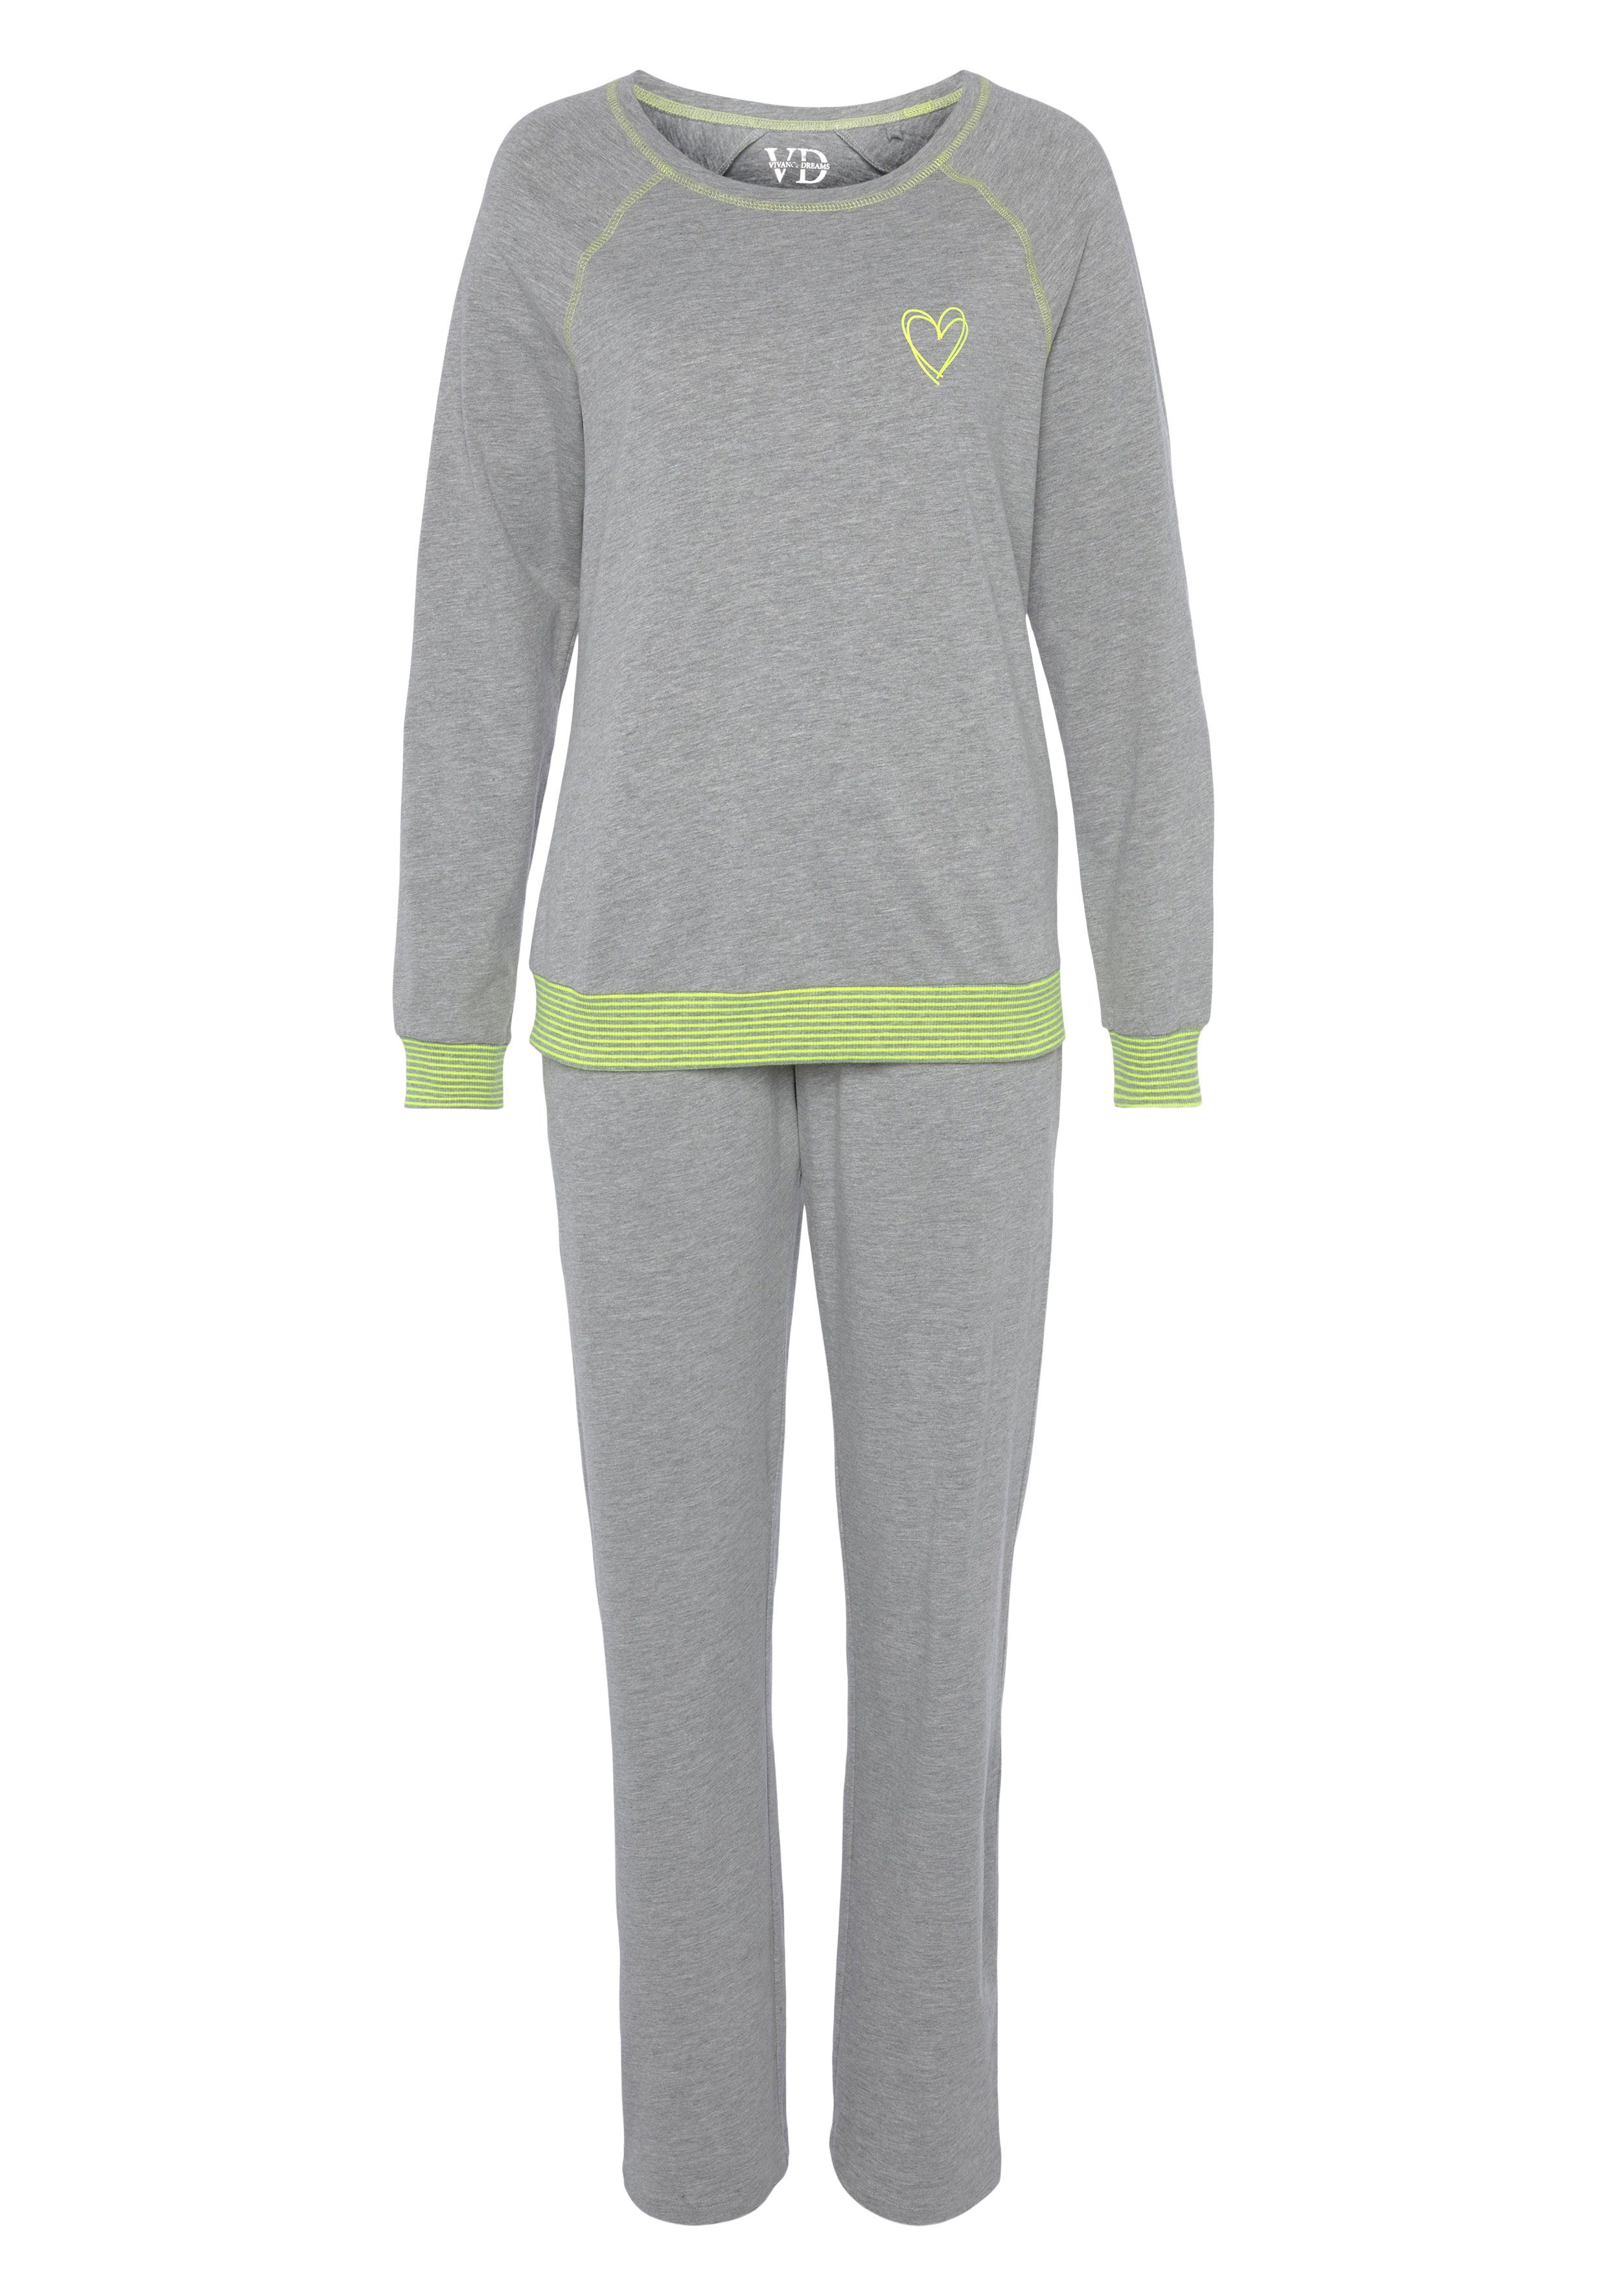 Vivance Dreams Pyjama (2 Neonfarben grau/neon-gelb in dekorativen mit Flatlock-Nähten tlg)